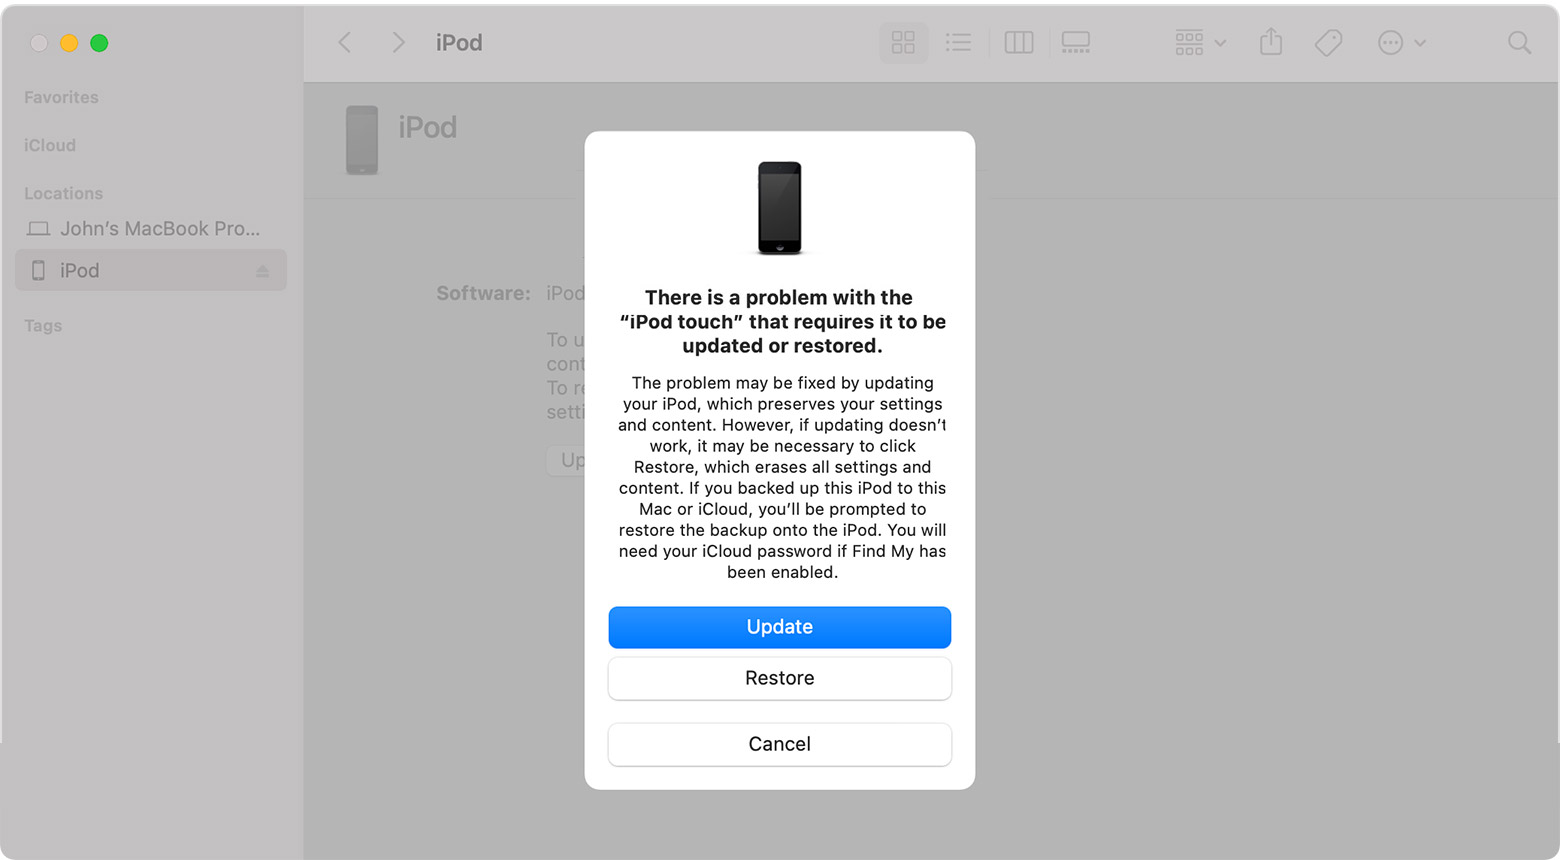 Finder 視窗顯示要選擇更新或回復 iPod touch 的提示。已選取「更新」。